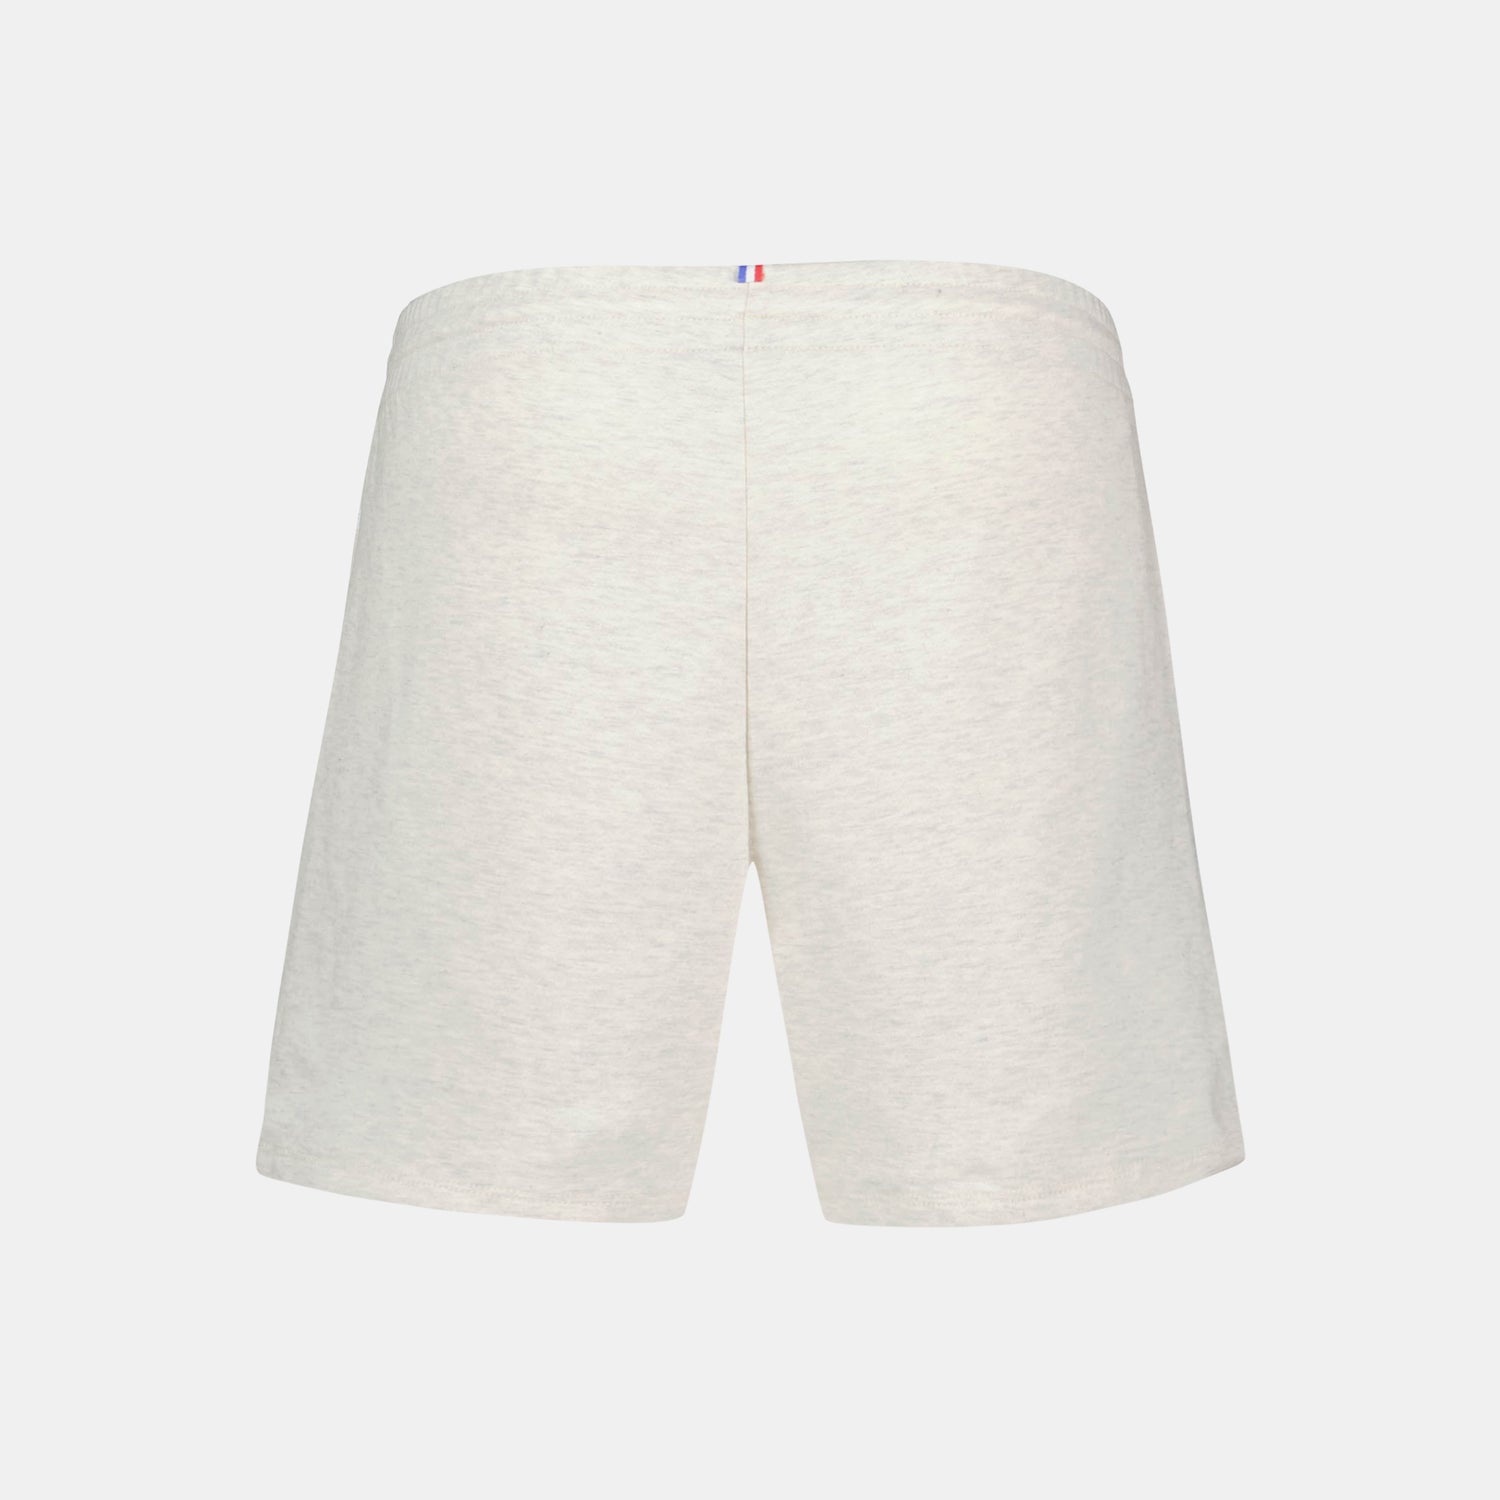 2410241-SAISON Short N°1 W beige chiné clair  | Shorts for women